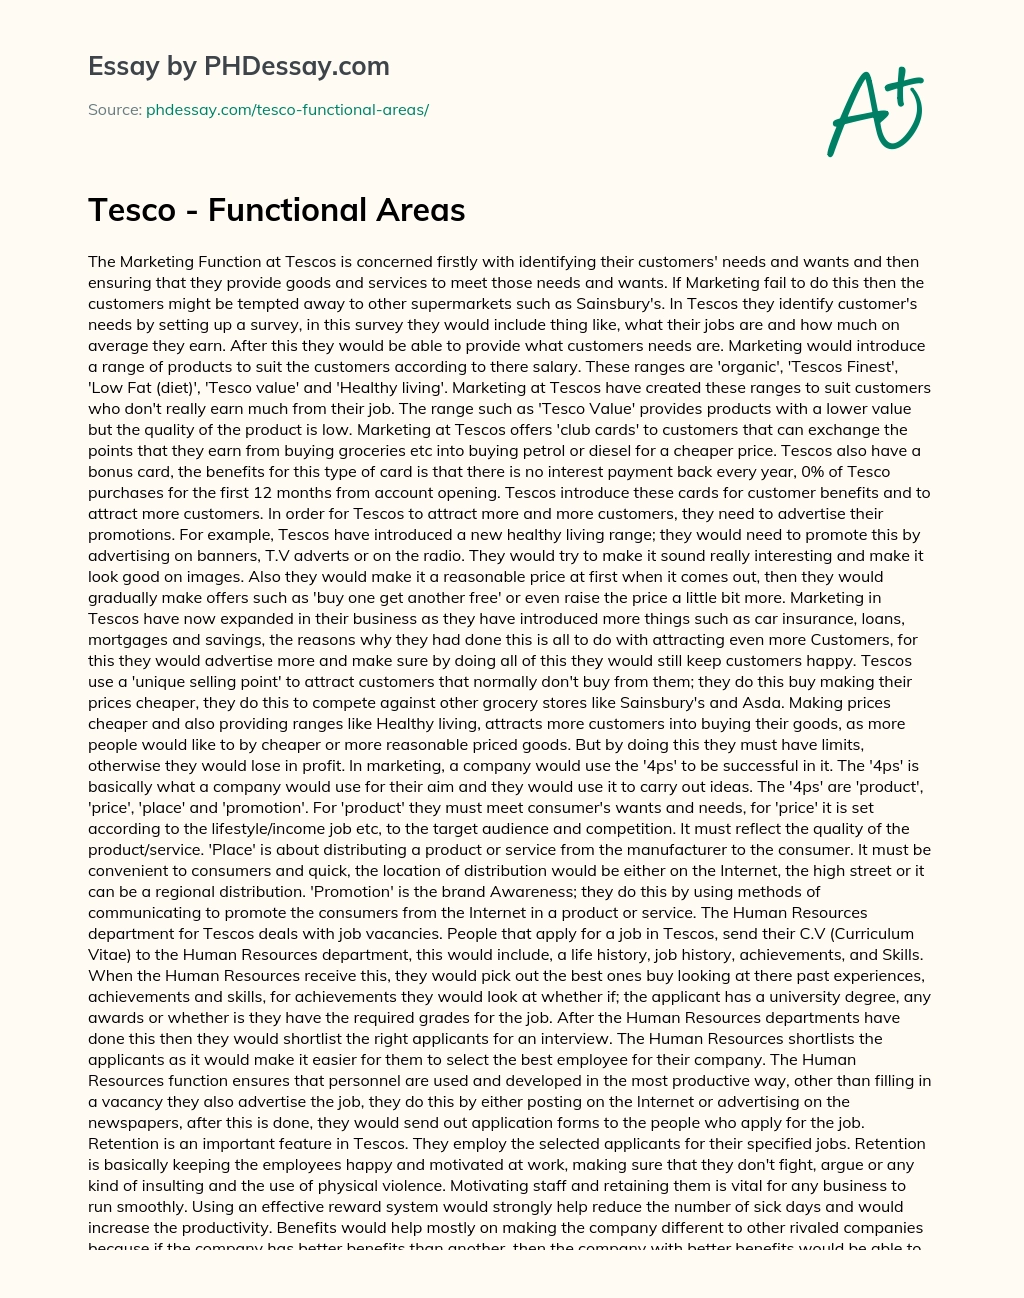 Tesco – Functional Areas essay